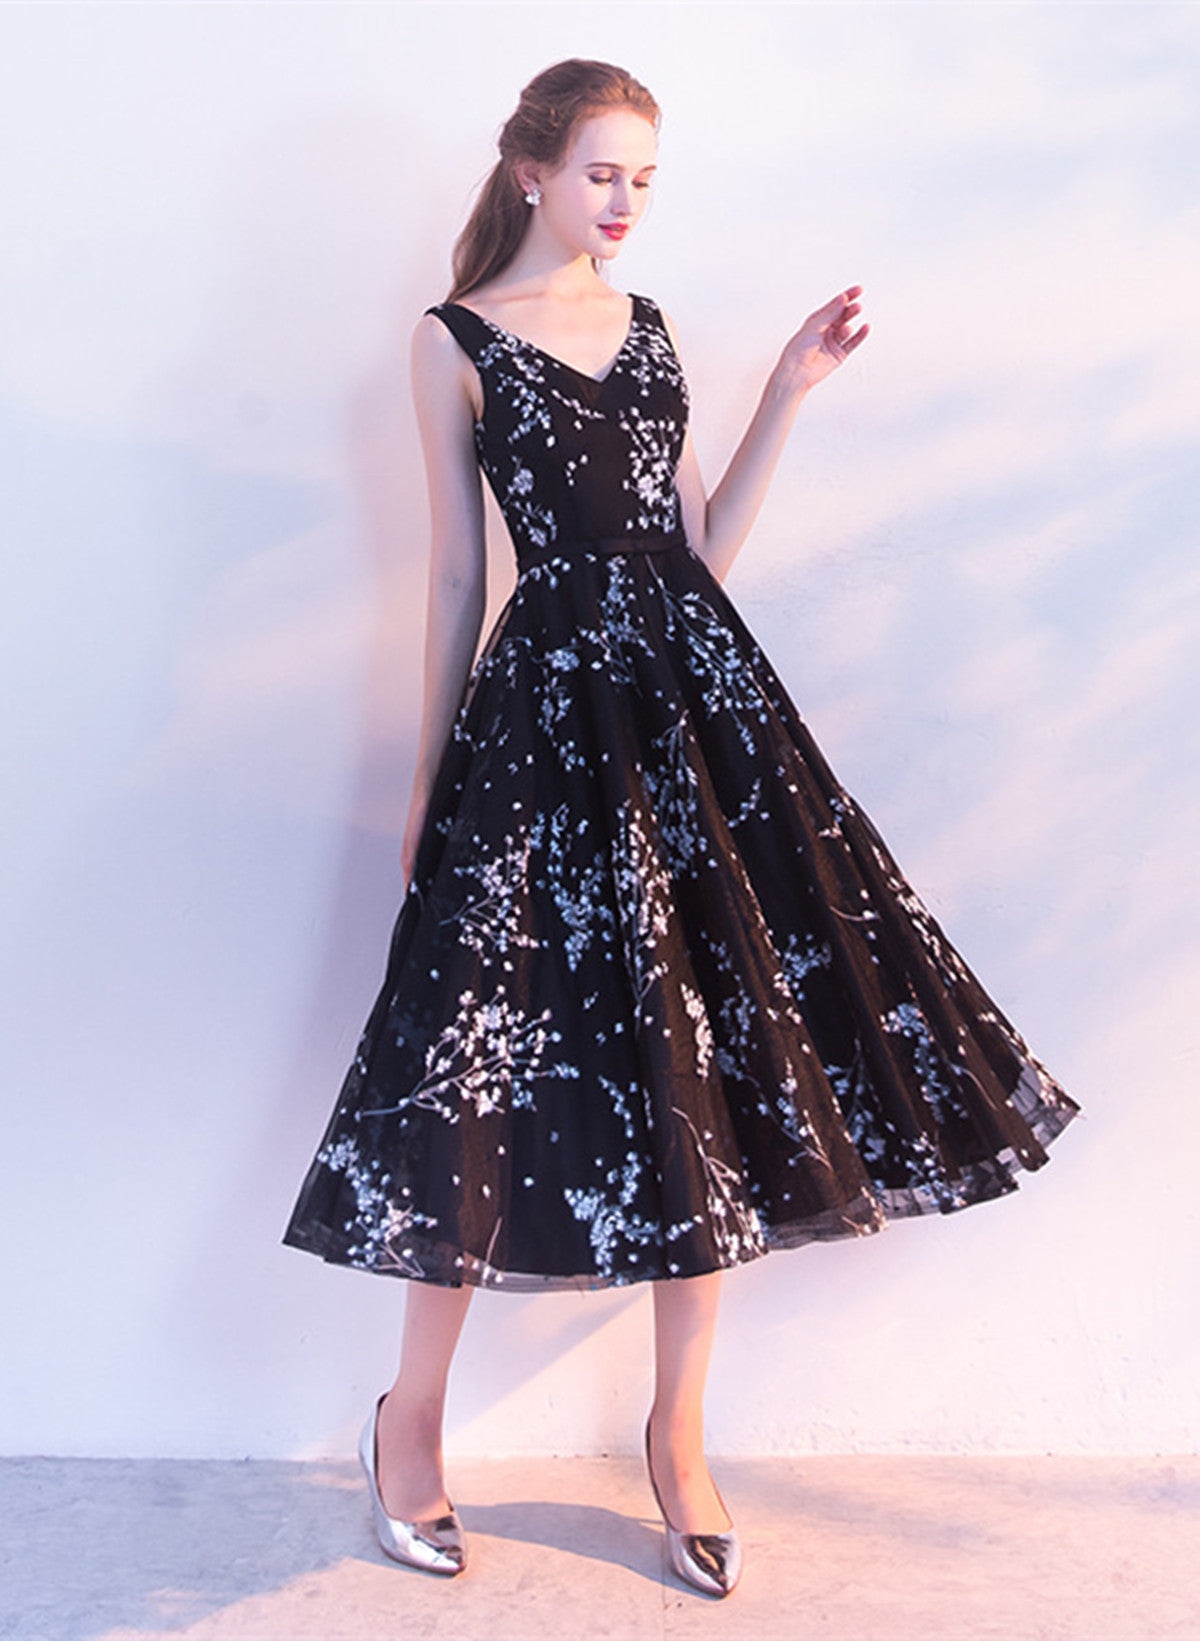 Black Floral Tulle V-neckline Tea Length Party Dress, Black Tulle Homecoming Dress